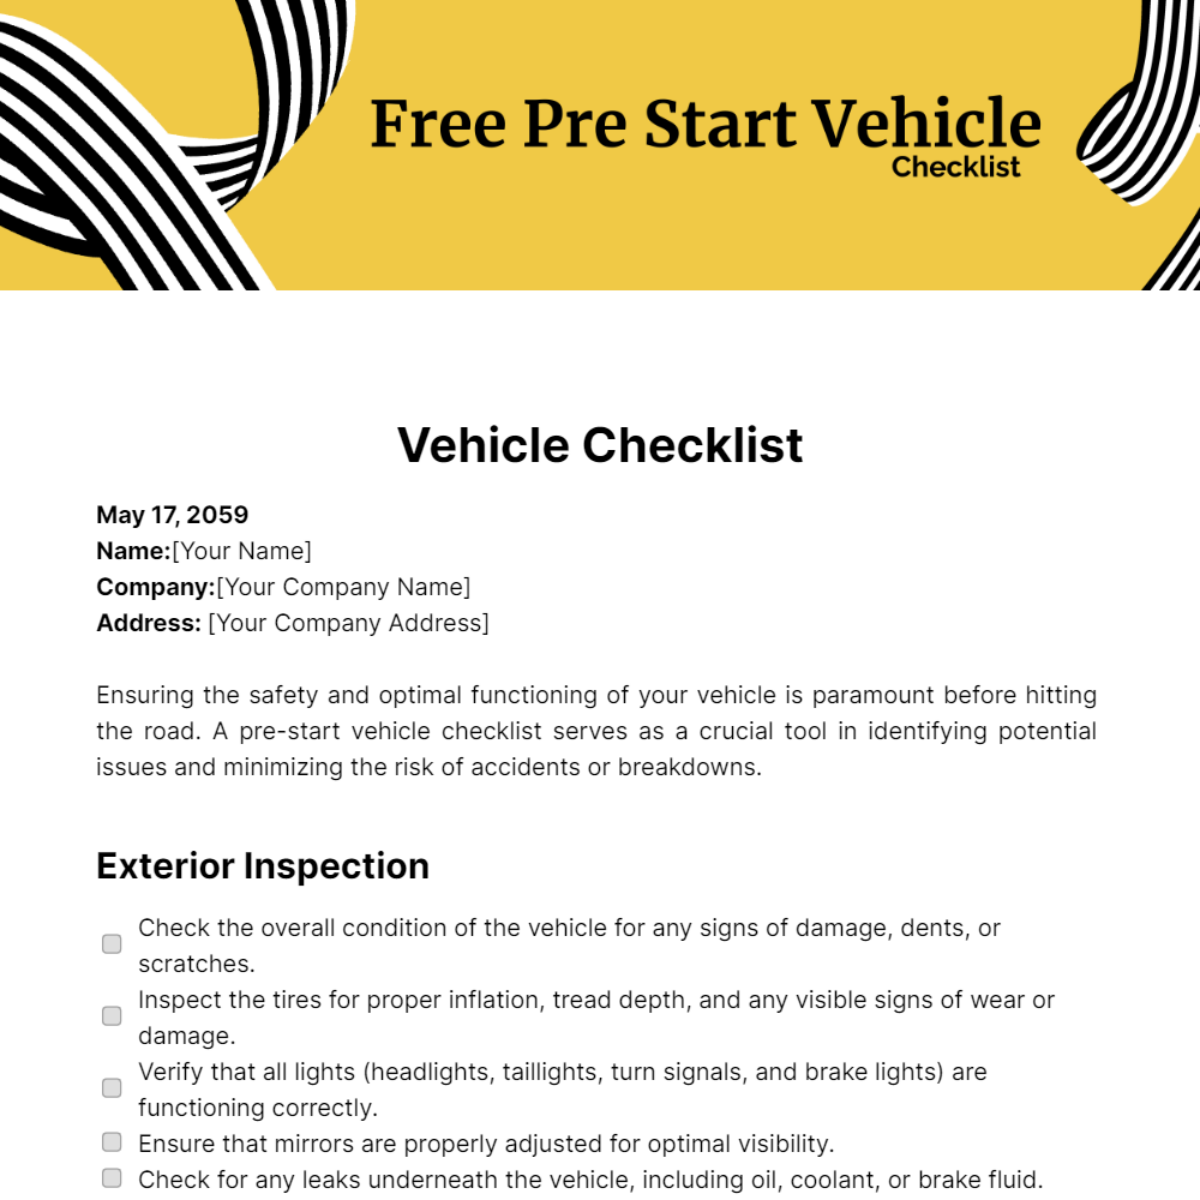 Free Pre Start Vehicle Checklist Template